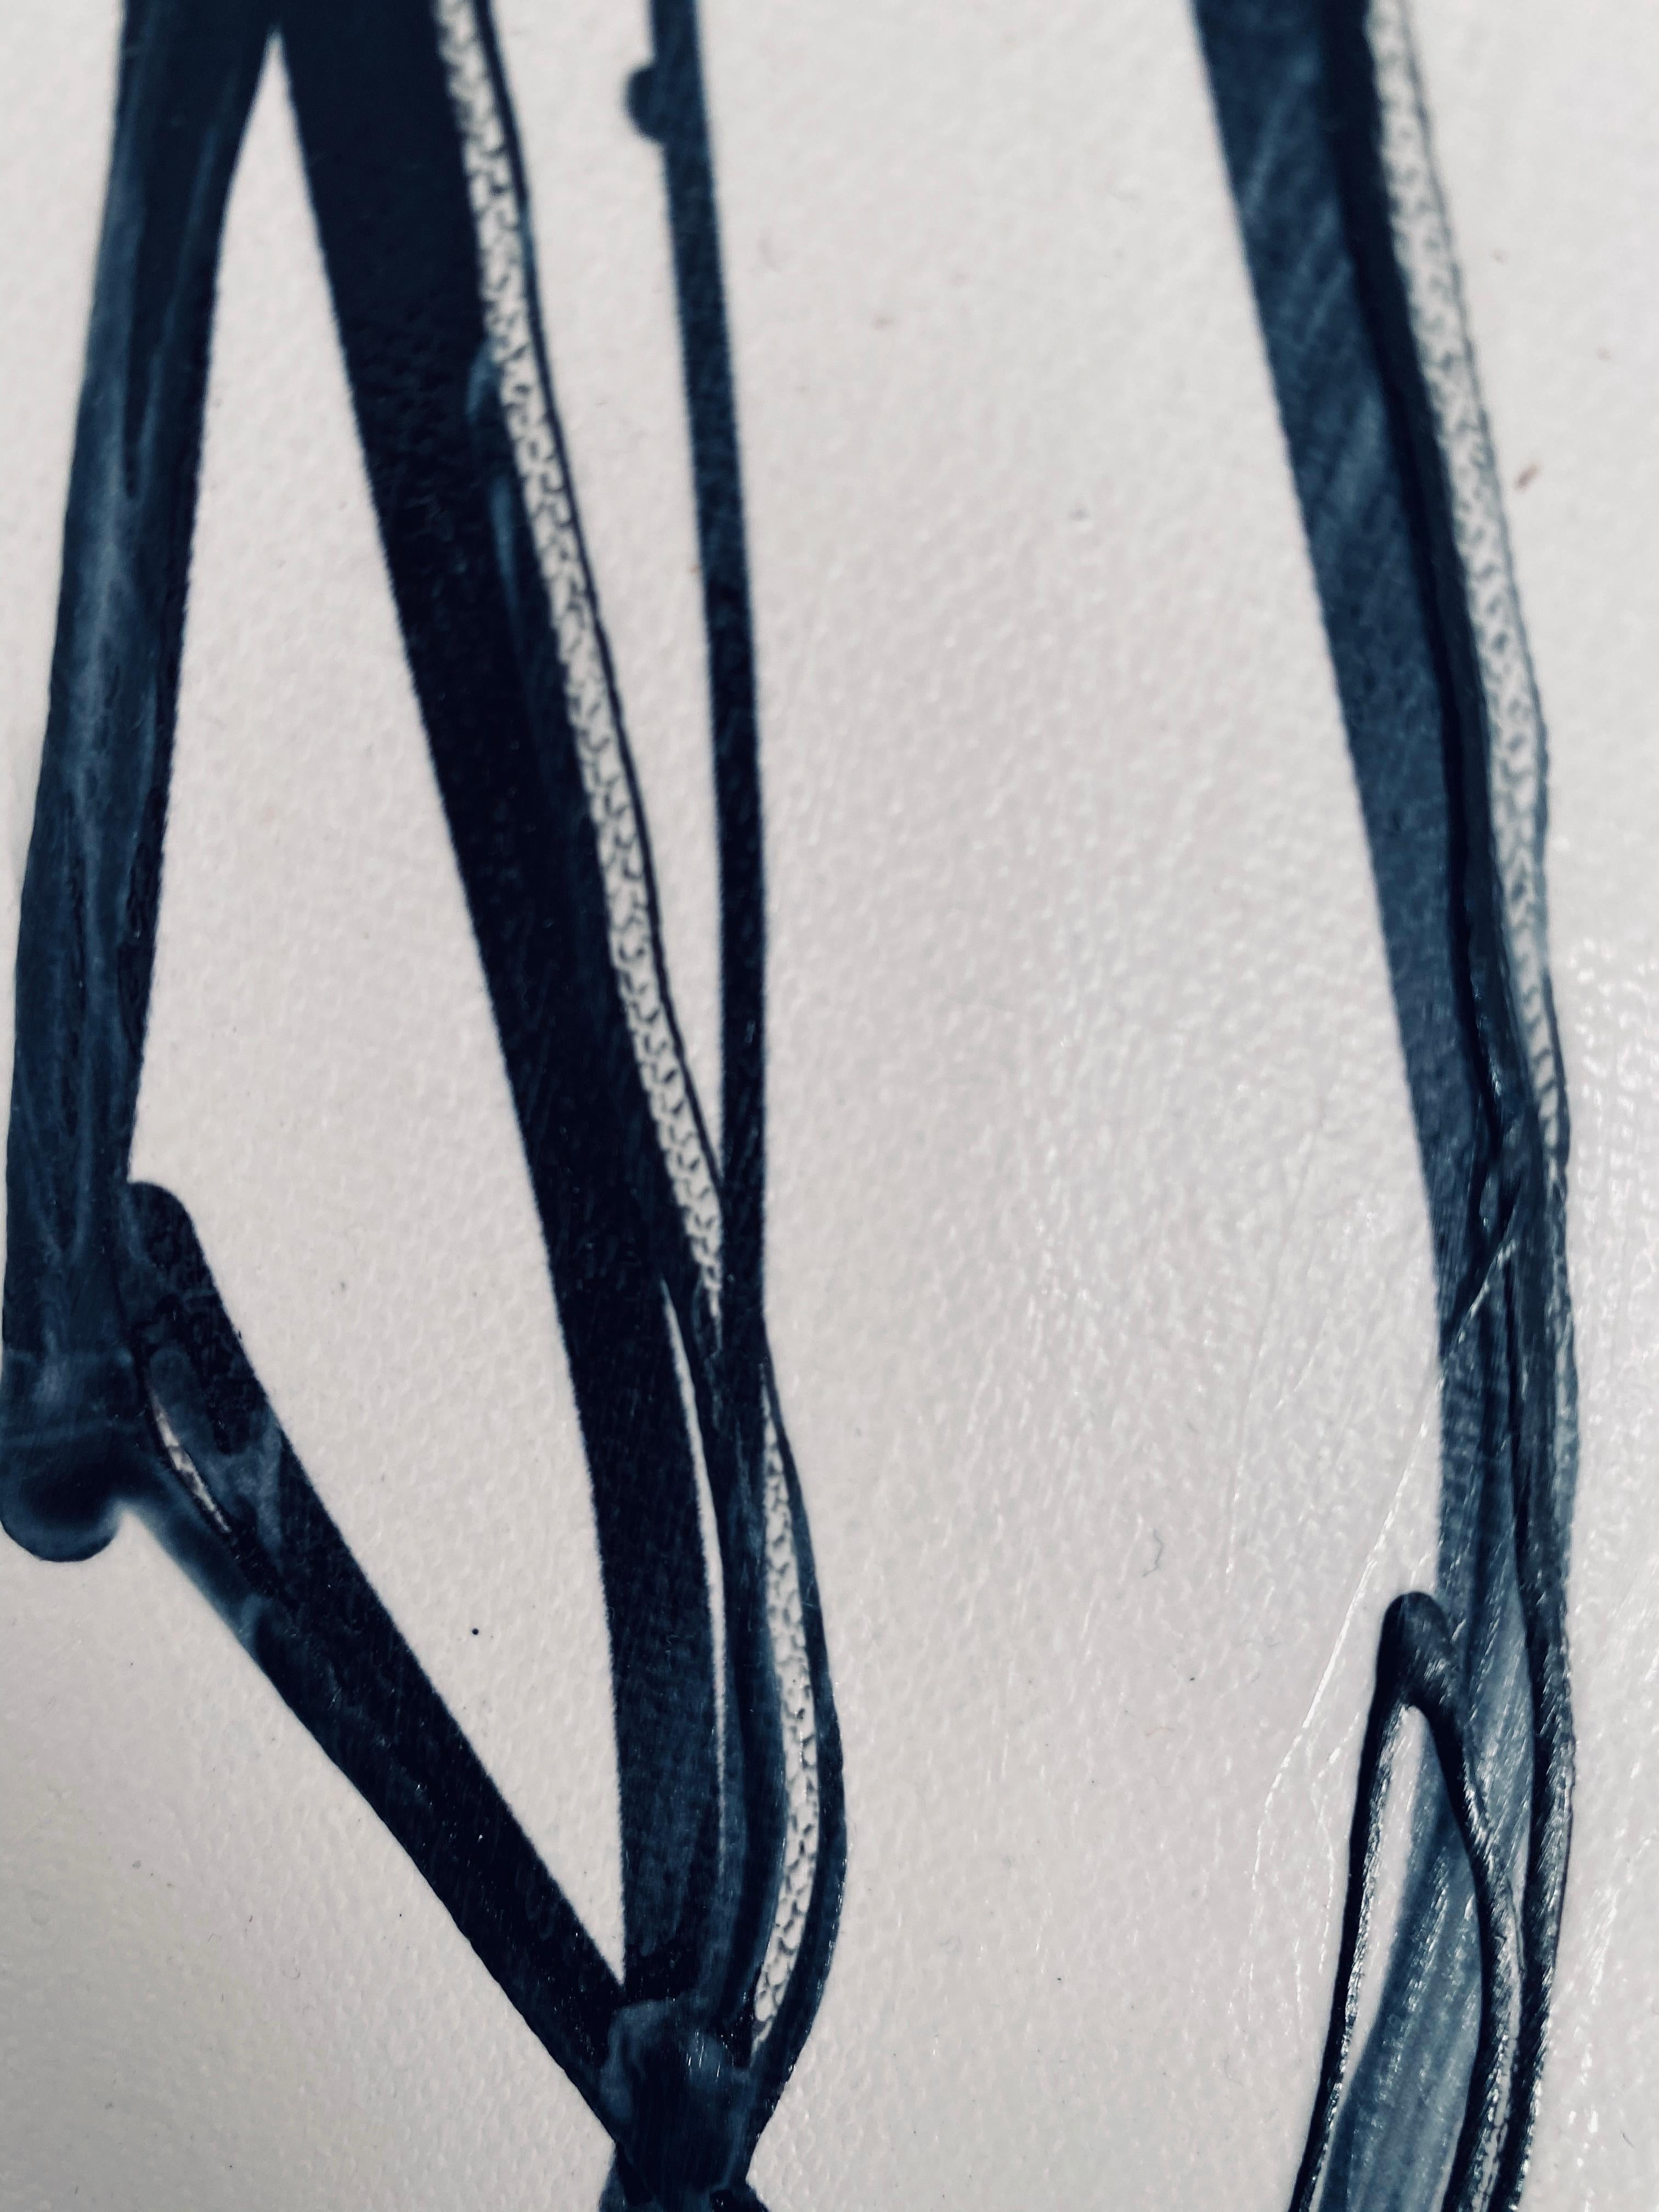 Minimalist Teal Cooper Black Line Art Painting Hand Embellished Giclee on Canvas 3